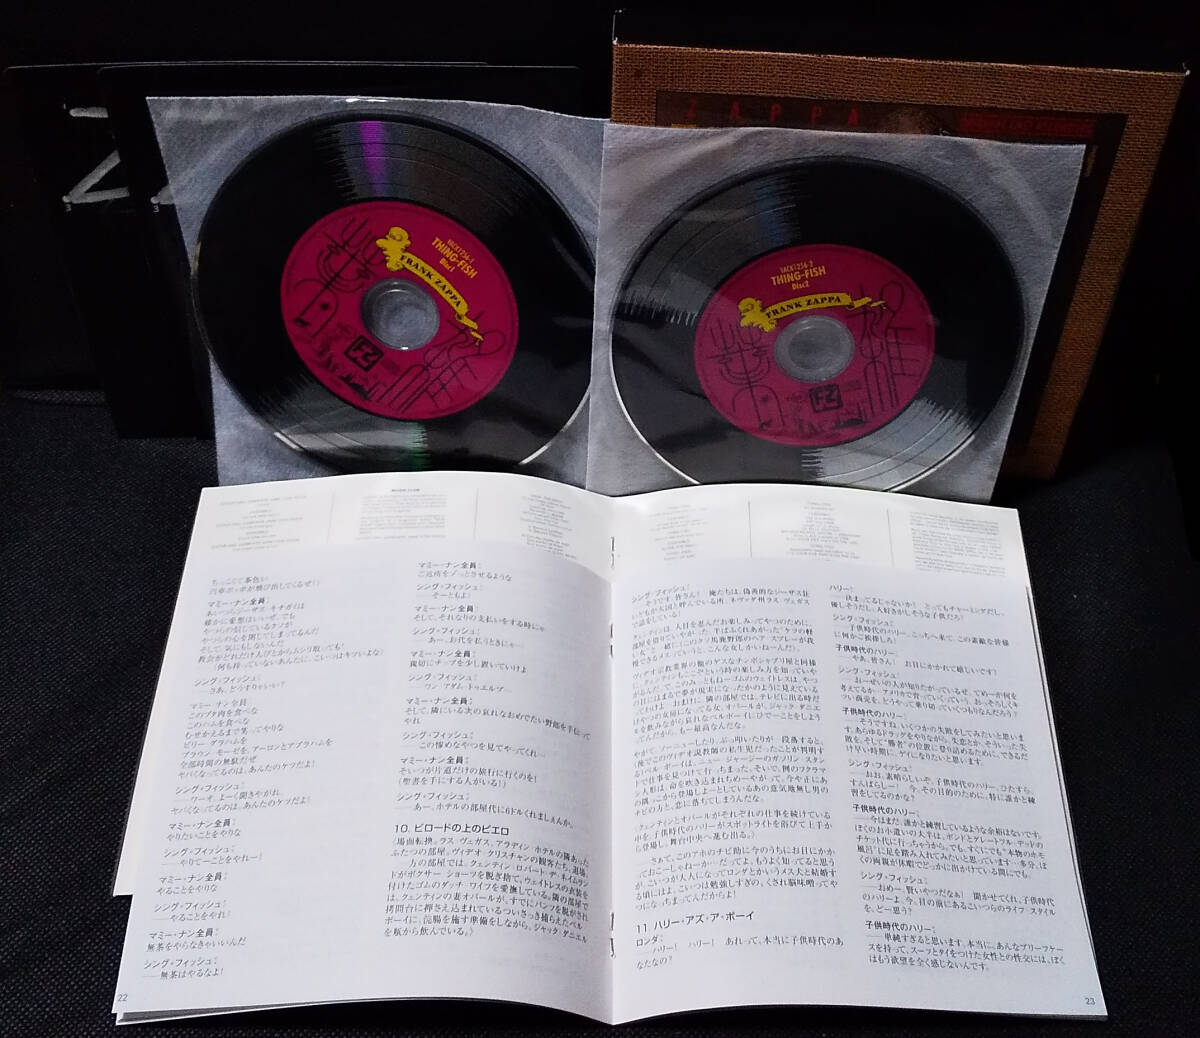 Frank Zappa - Thing-Fish 国内盤 2xCD BOX SET, Remastered, Ltd Edition Rykodisc - VACK-1256 フランク・ザッパ 2002年_画像6